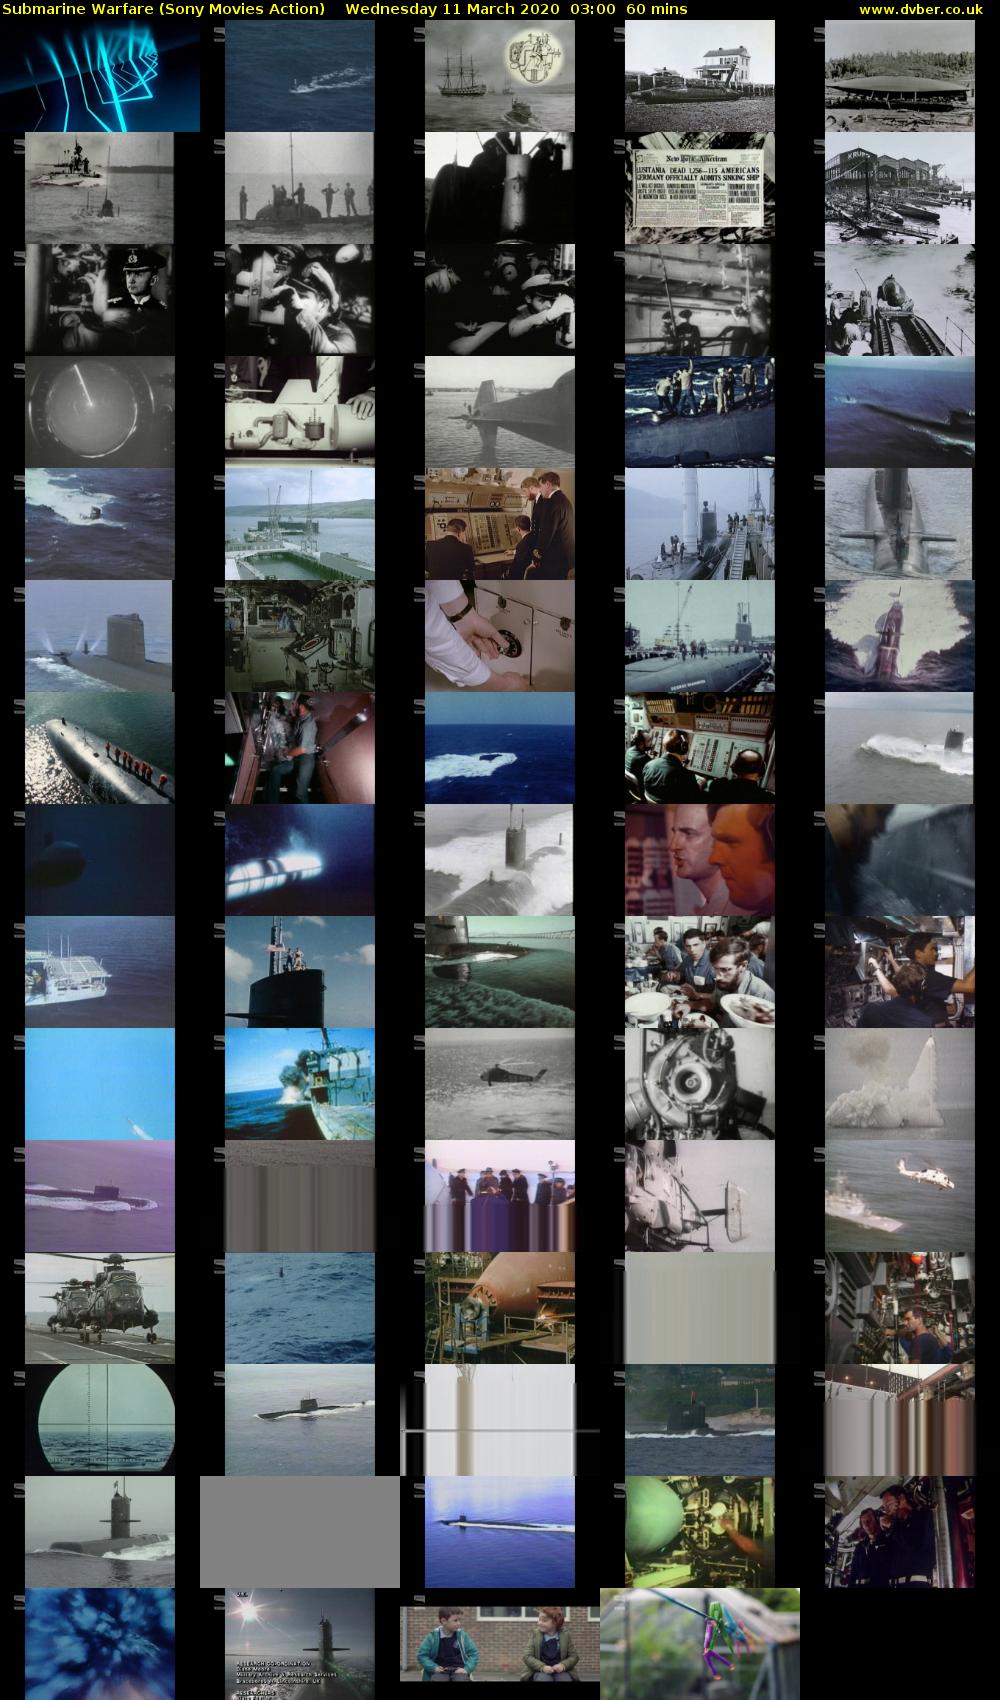 Submarine Warfare (Sony Movies Action) Wednesday 11 March 2020 03:00 - 04:00